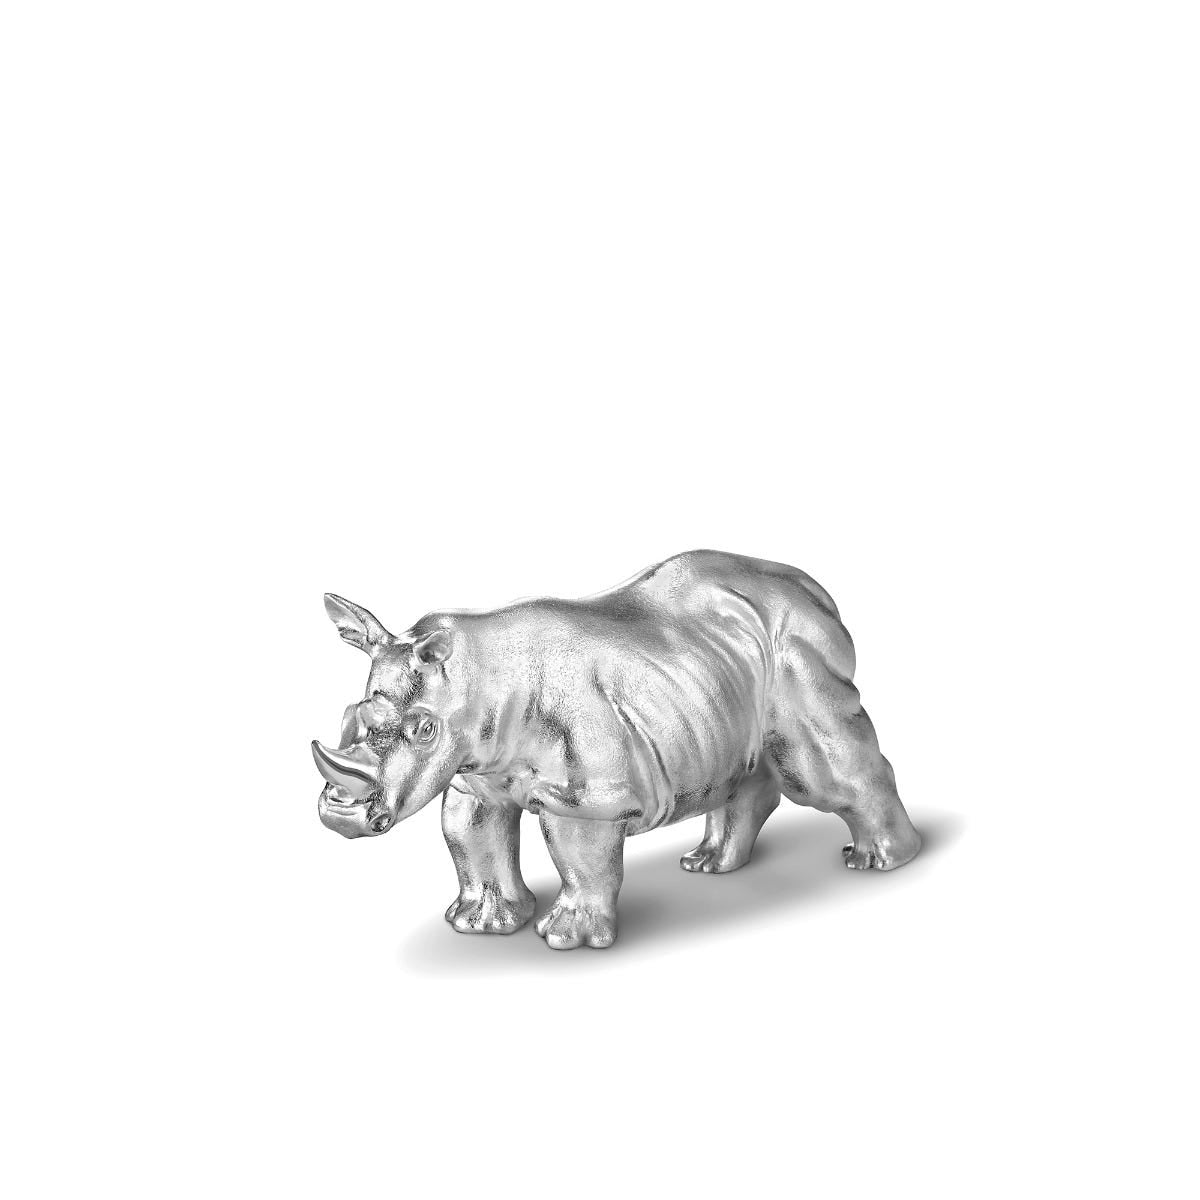 Rhino Figurine in Sterling Silver